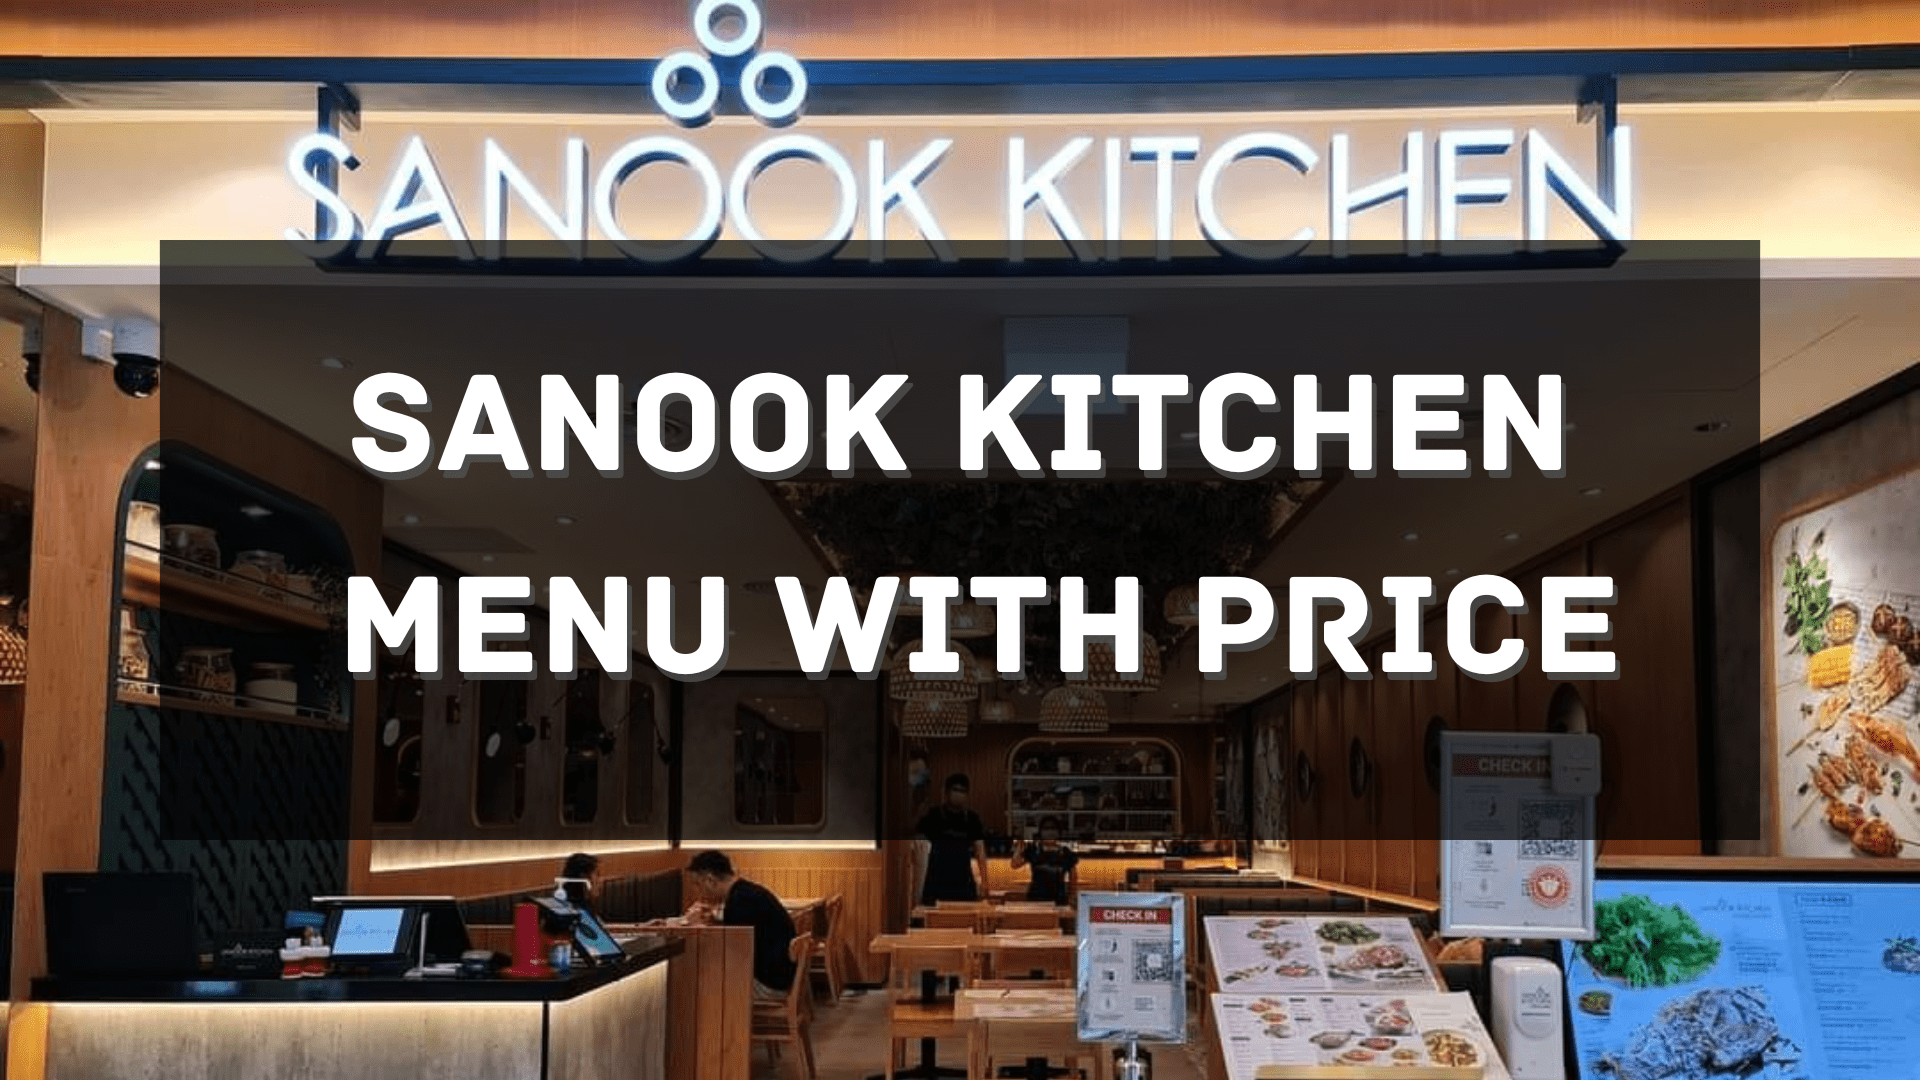 Sanook Kitchen Menu with Price Singapore